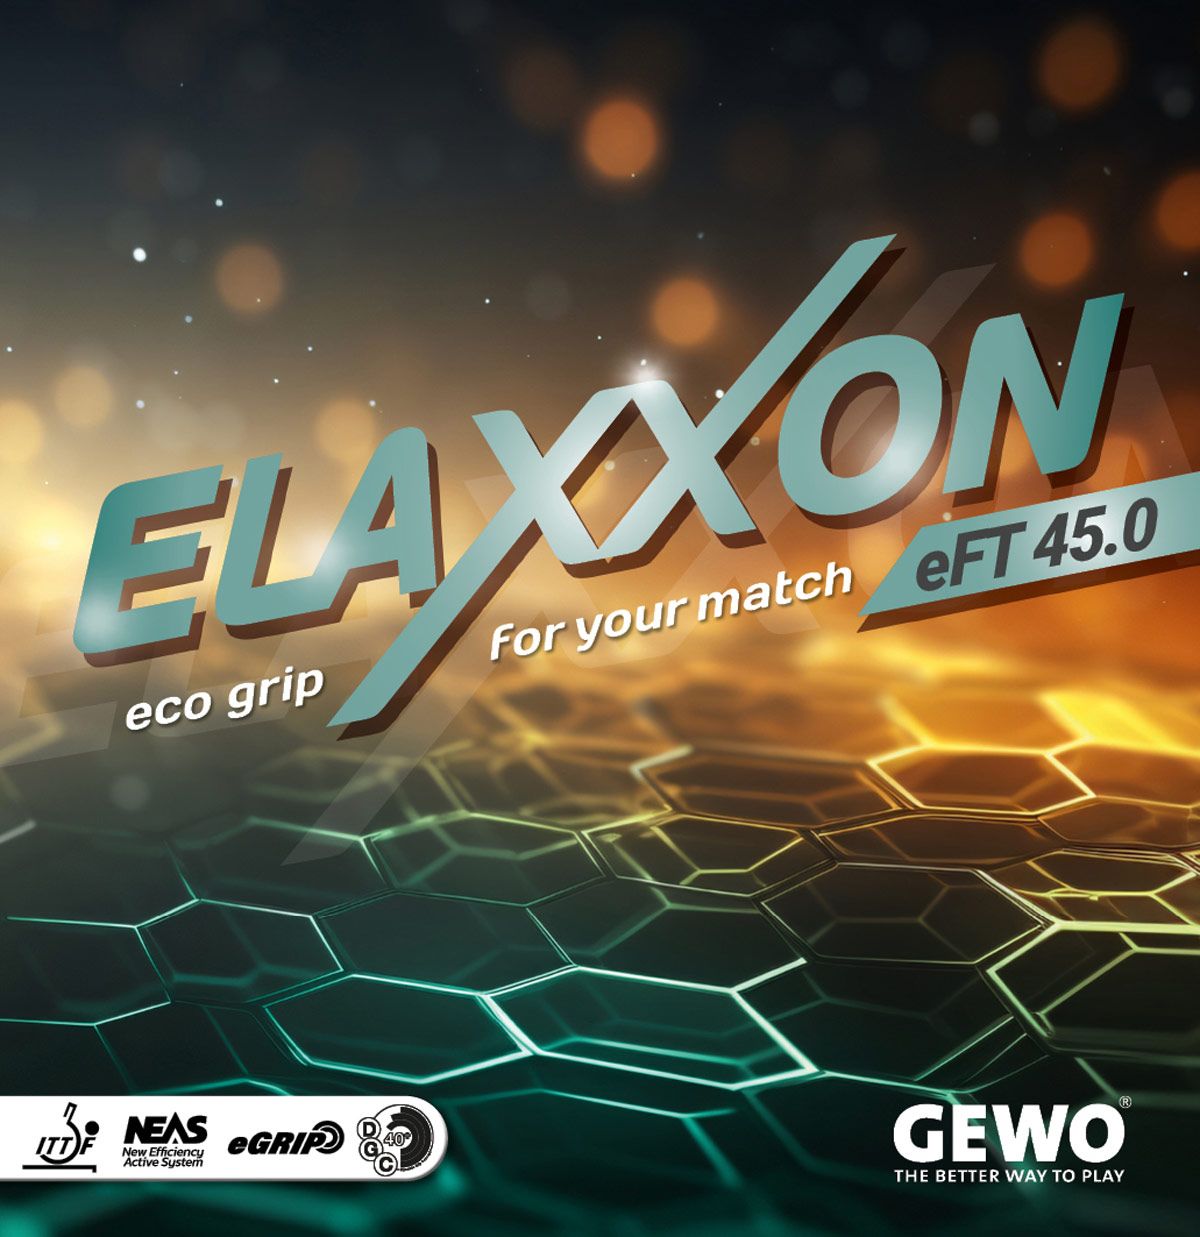 GEWO Elaxxon eFT 45.0 - Table Tennis Rubber